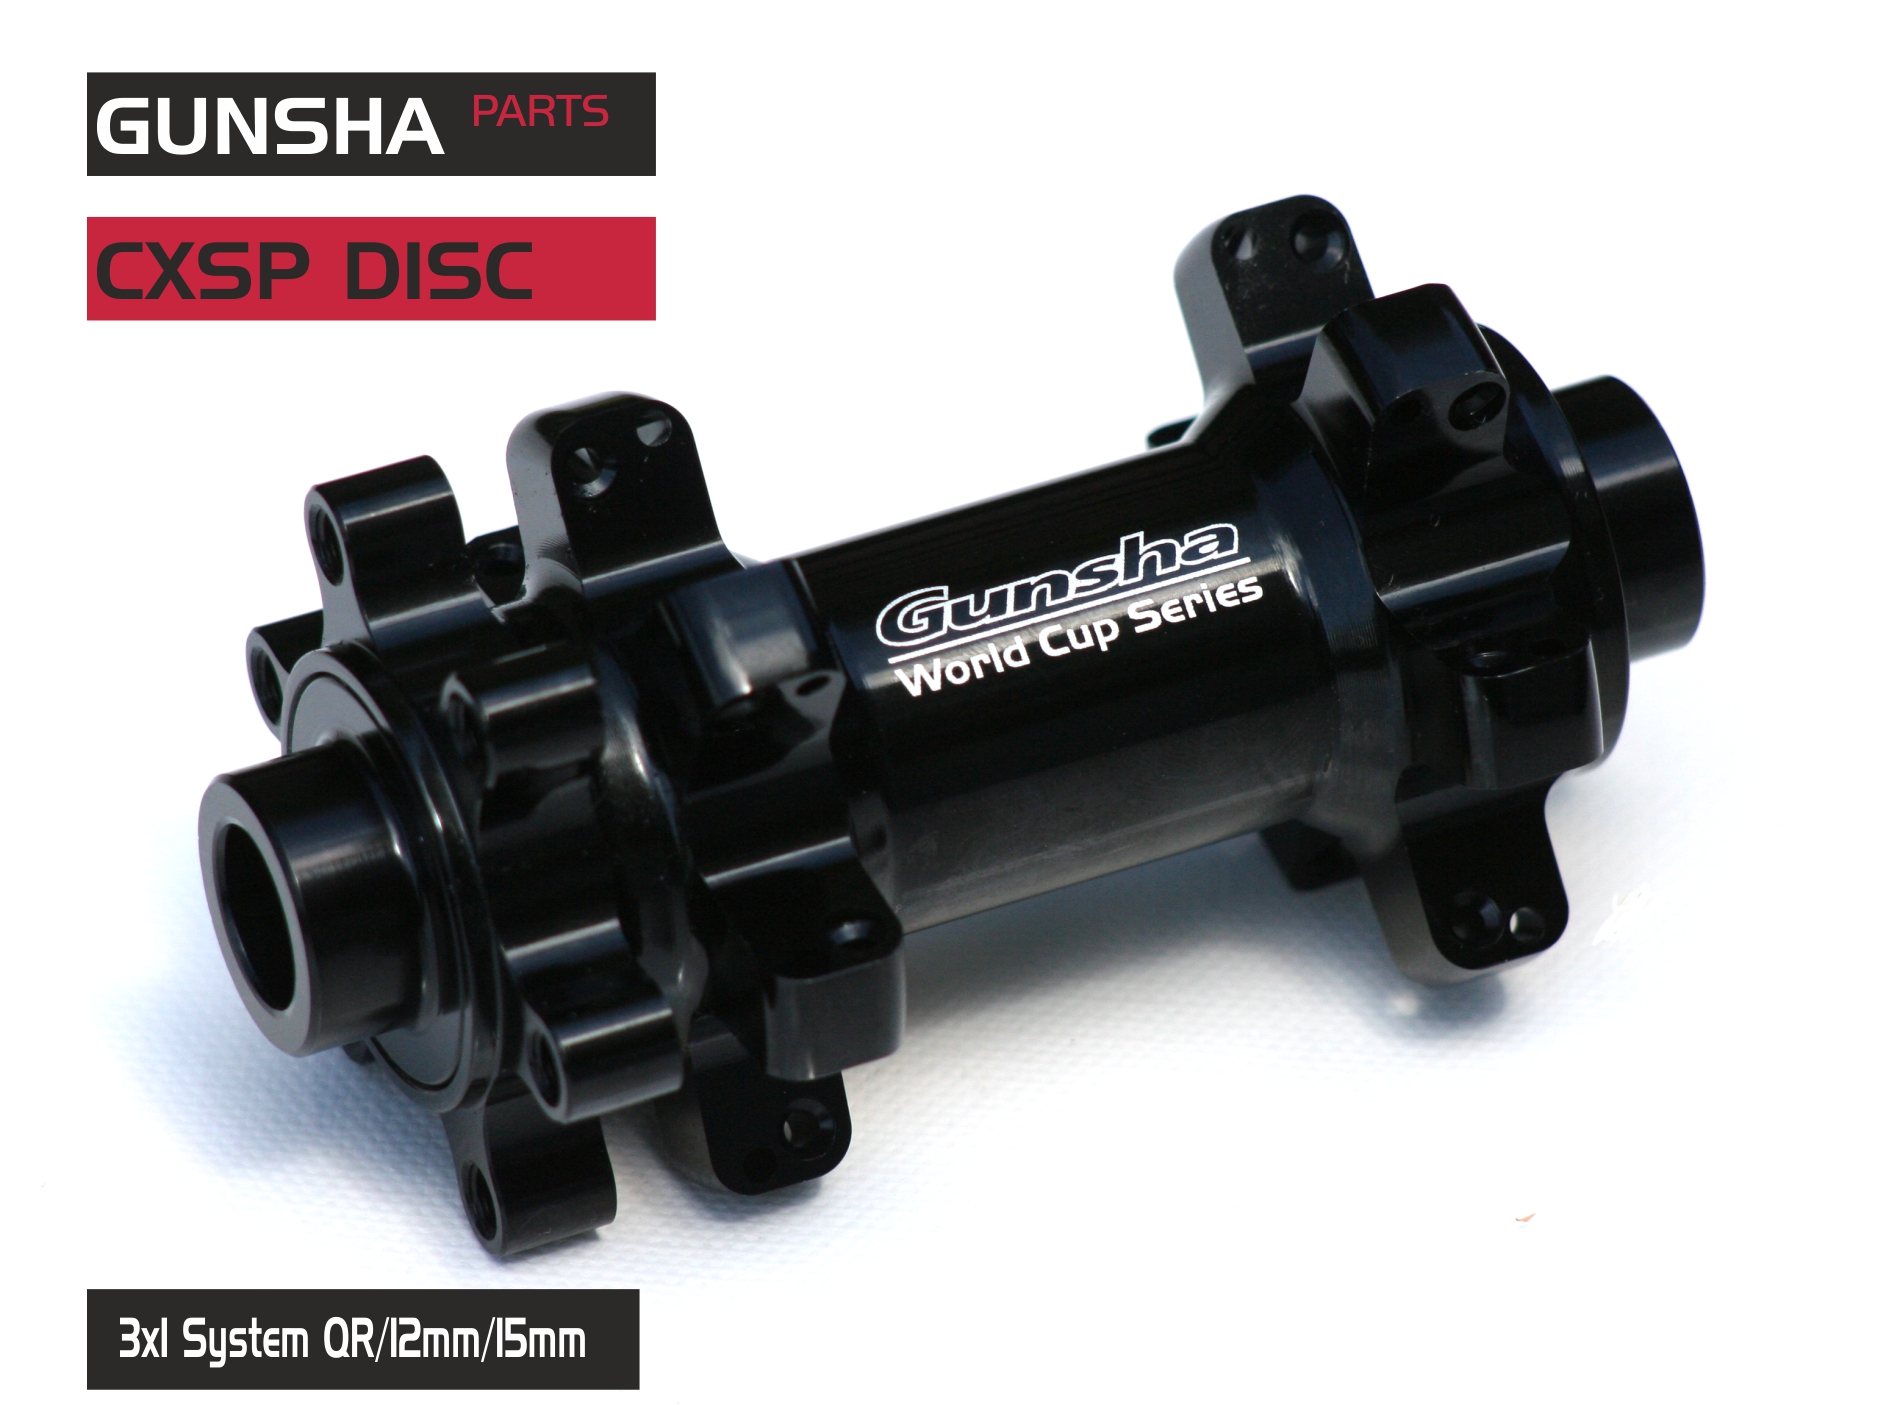 Gunsha Front hub CXSP  Straightpull  (3x1 System)